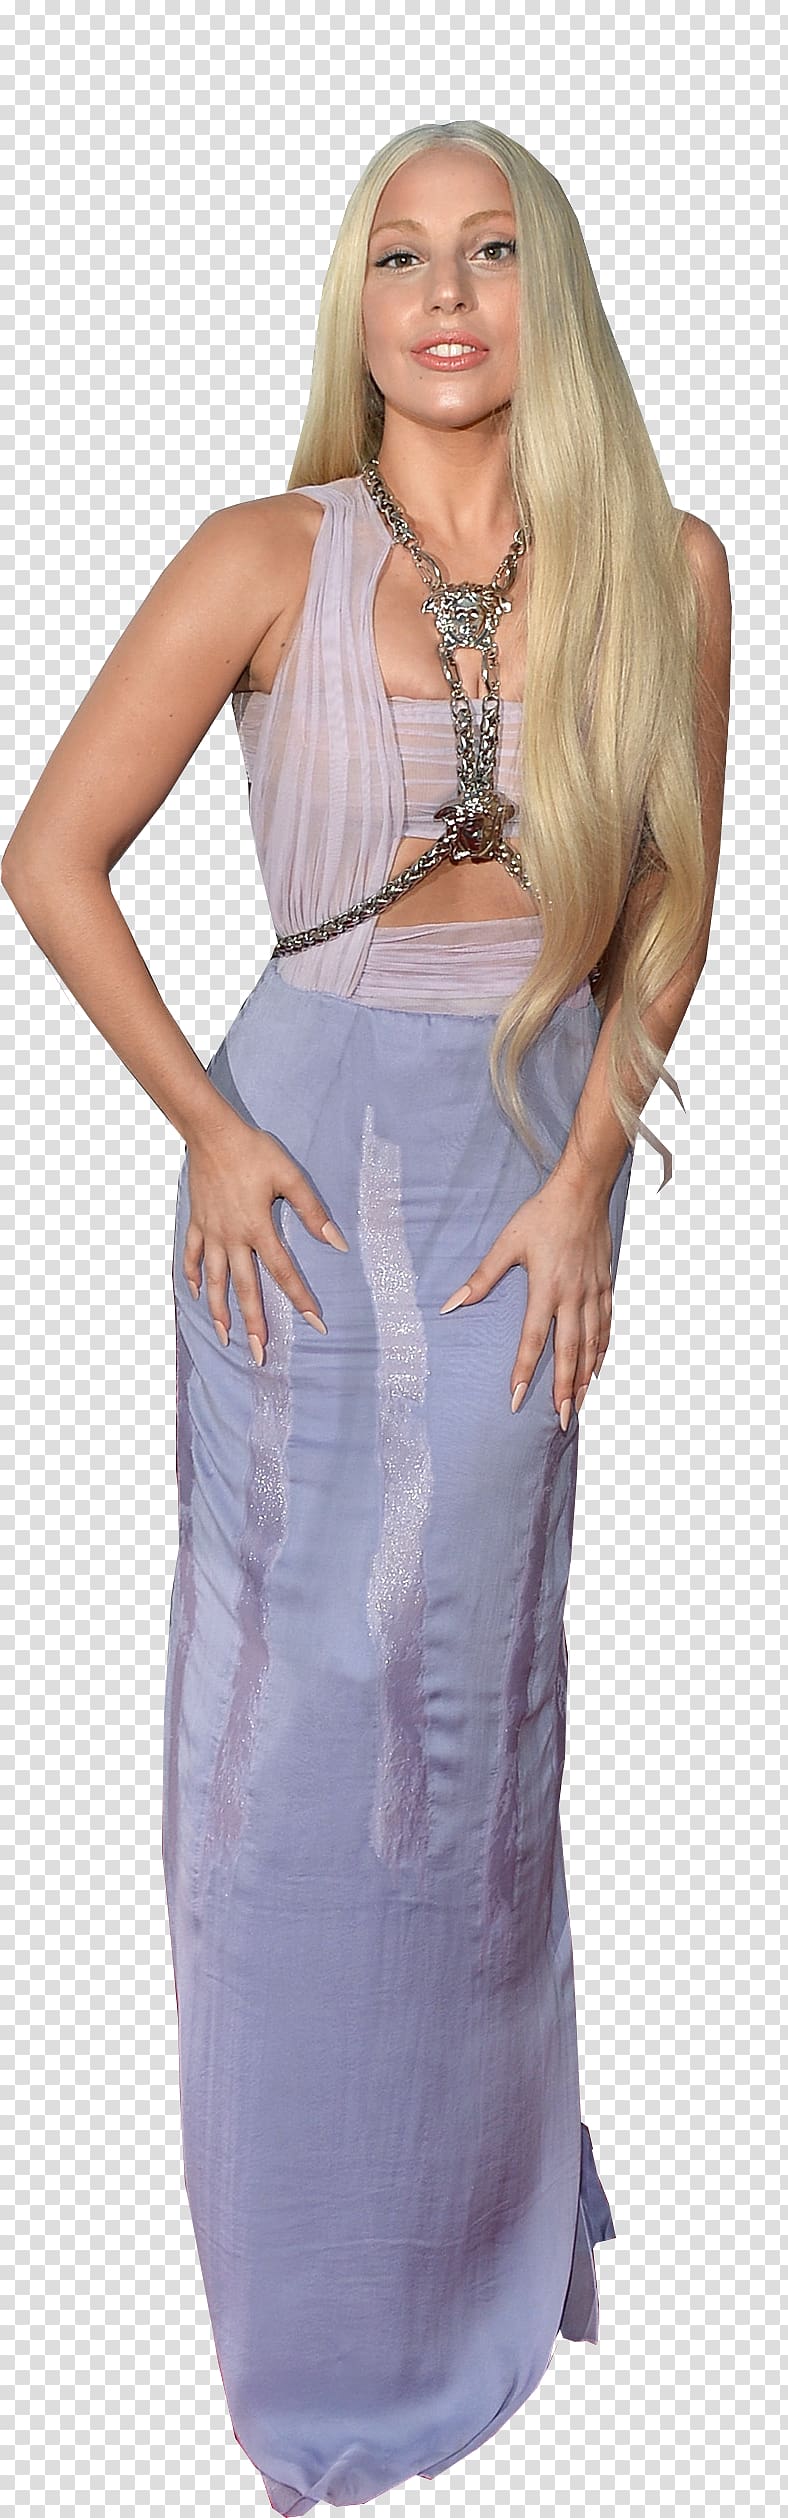 Lady Gaga Eau de Gaga Musician, model transparent background PNG clipart